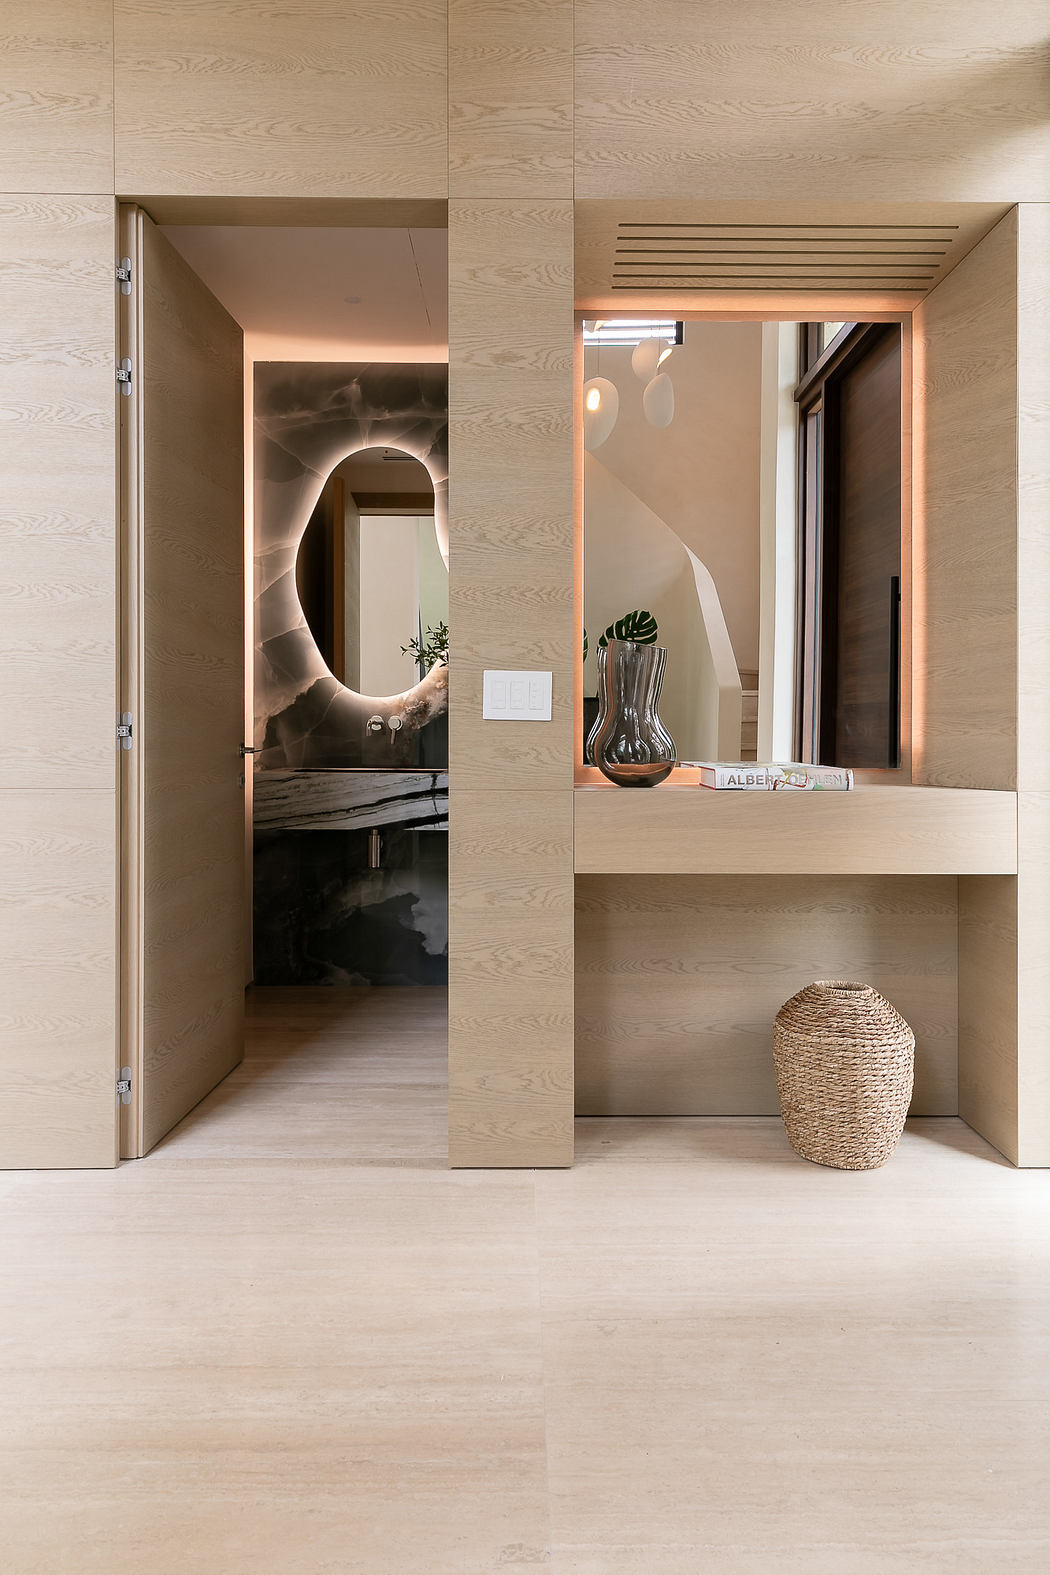 Modern interior with wooden finishes, minimalist desk, and decorative mirror.